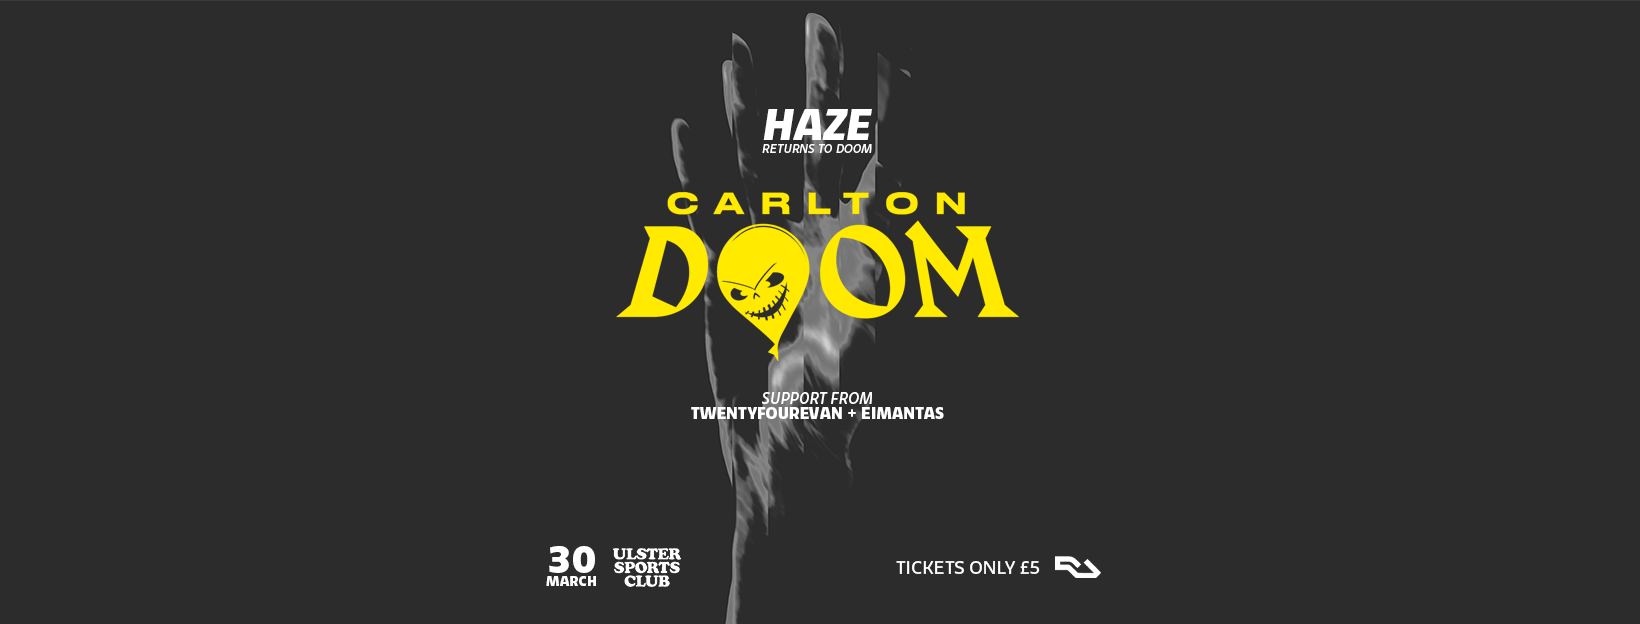 HAZE presents: Carlton Doom - フライヤー表